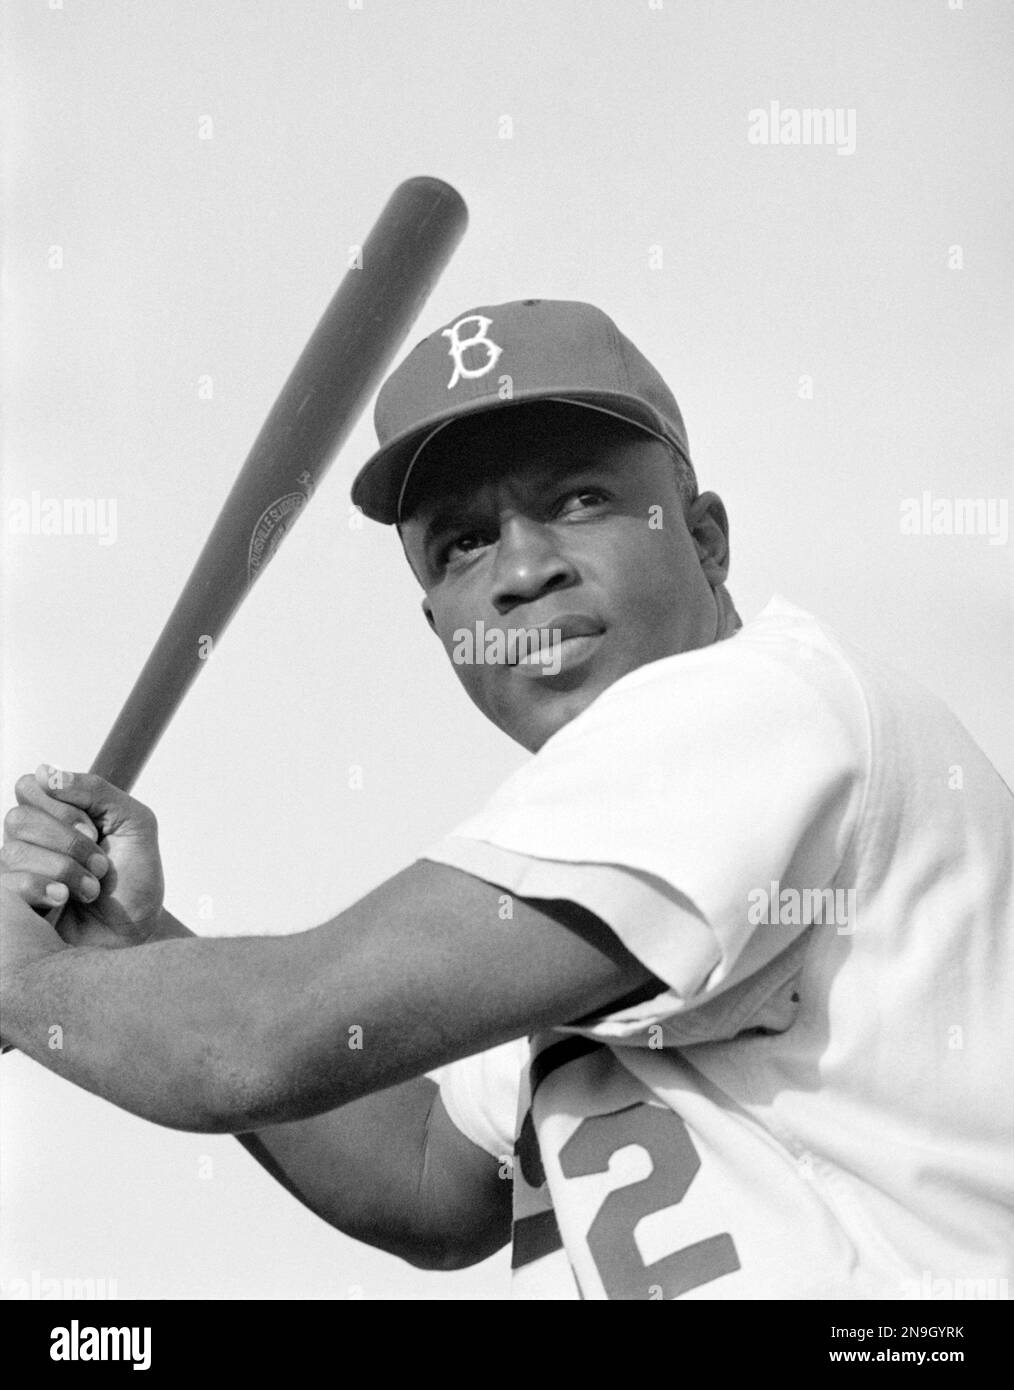 Jack Robinson, Jack Roosevelt Robinson (1919-1972), amerikanischer Profi-Baseballspieler, der als erster Afroamerikaner in der Major League Baseball spielte Stockfoto